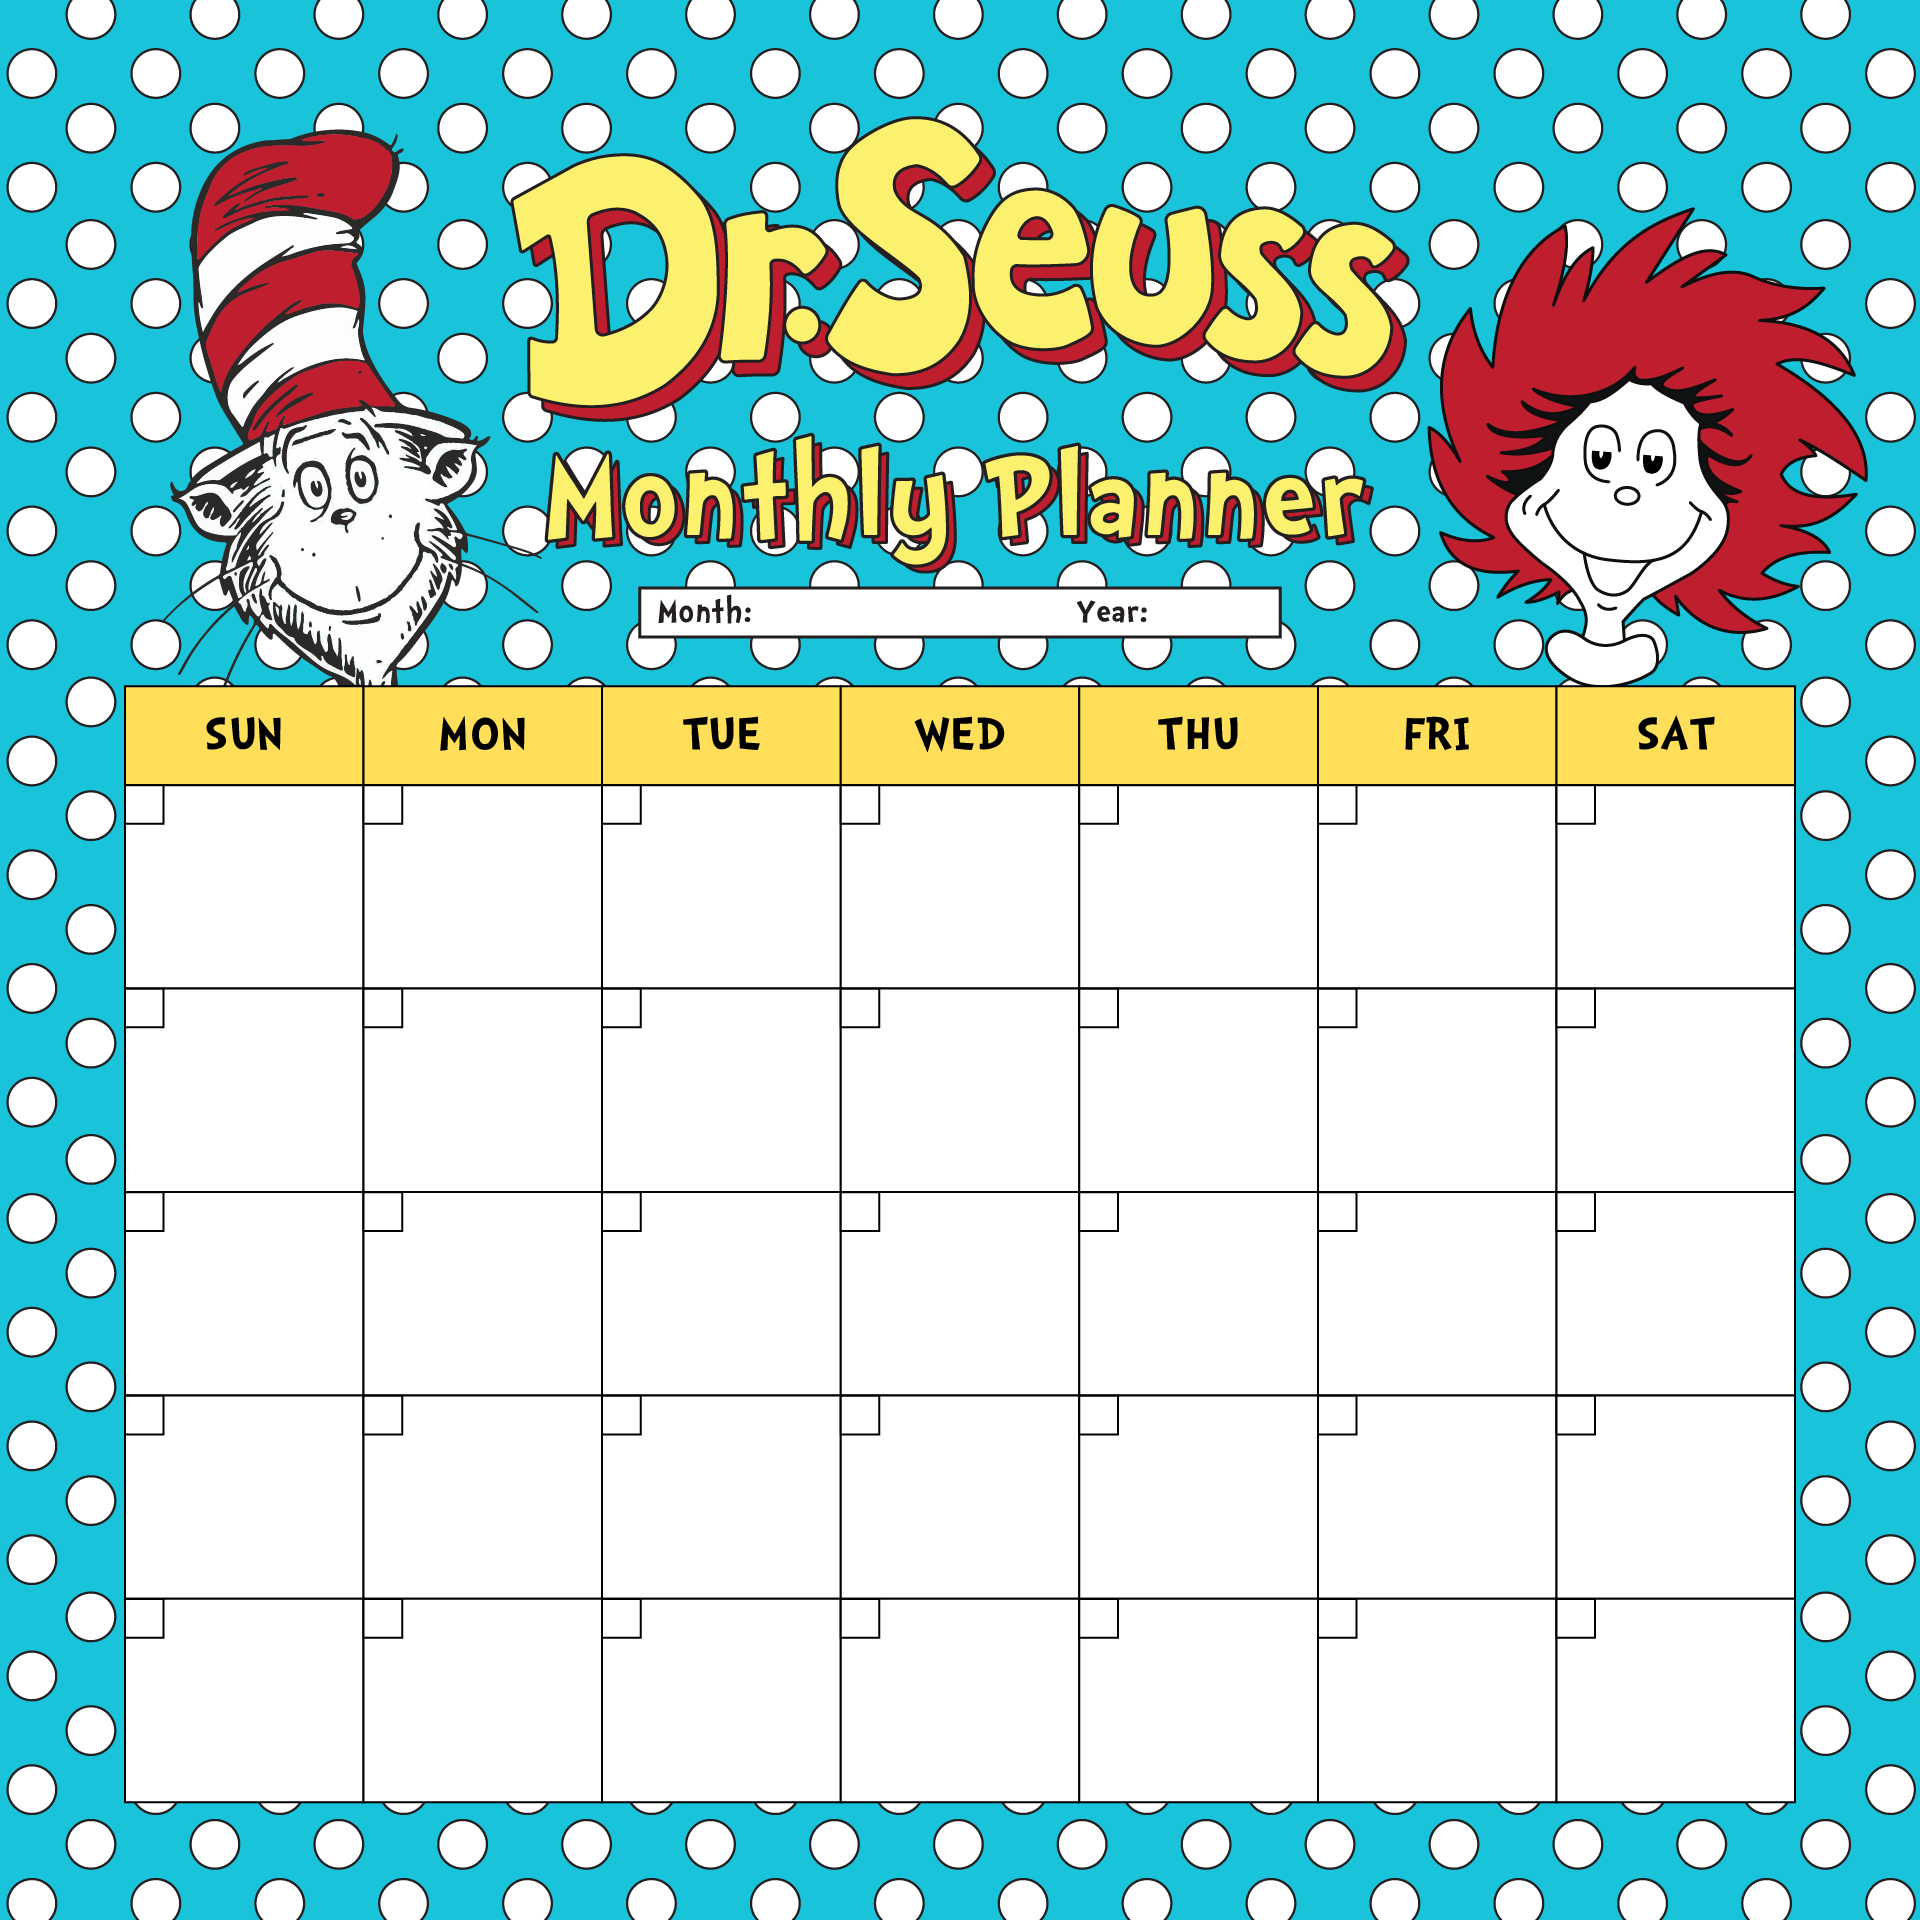 Dr Seuss Month Planner Template